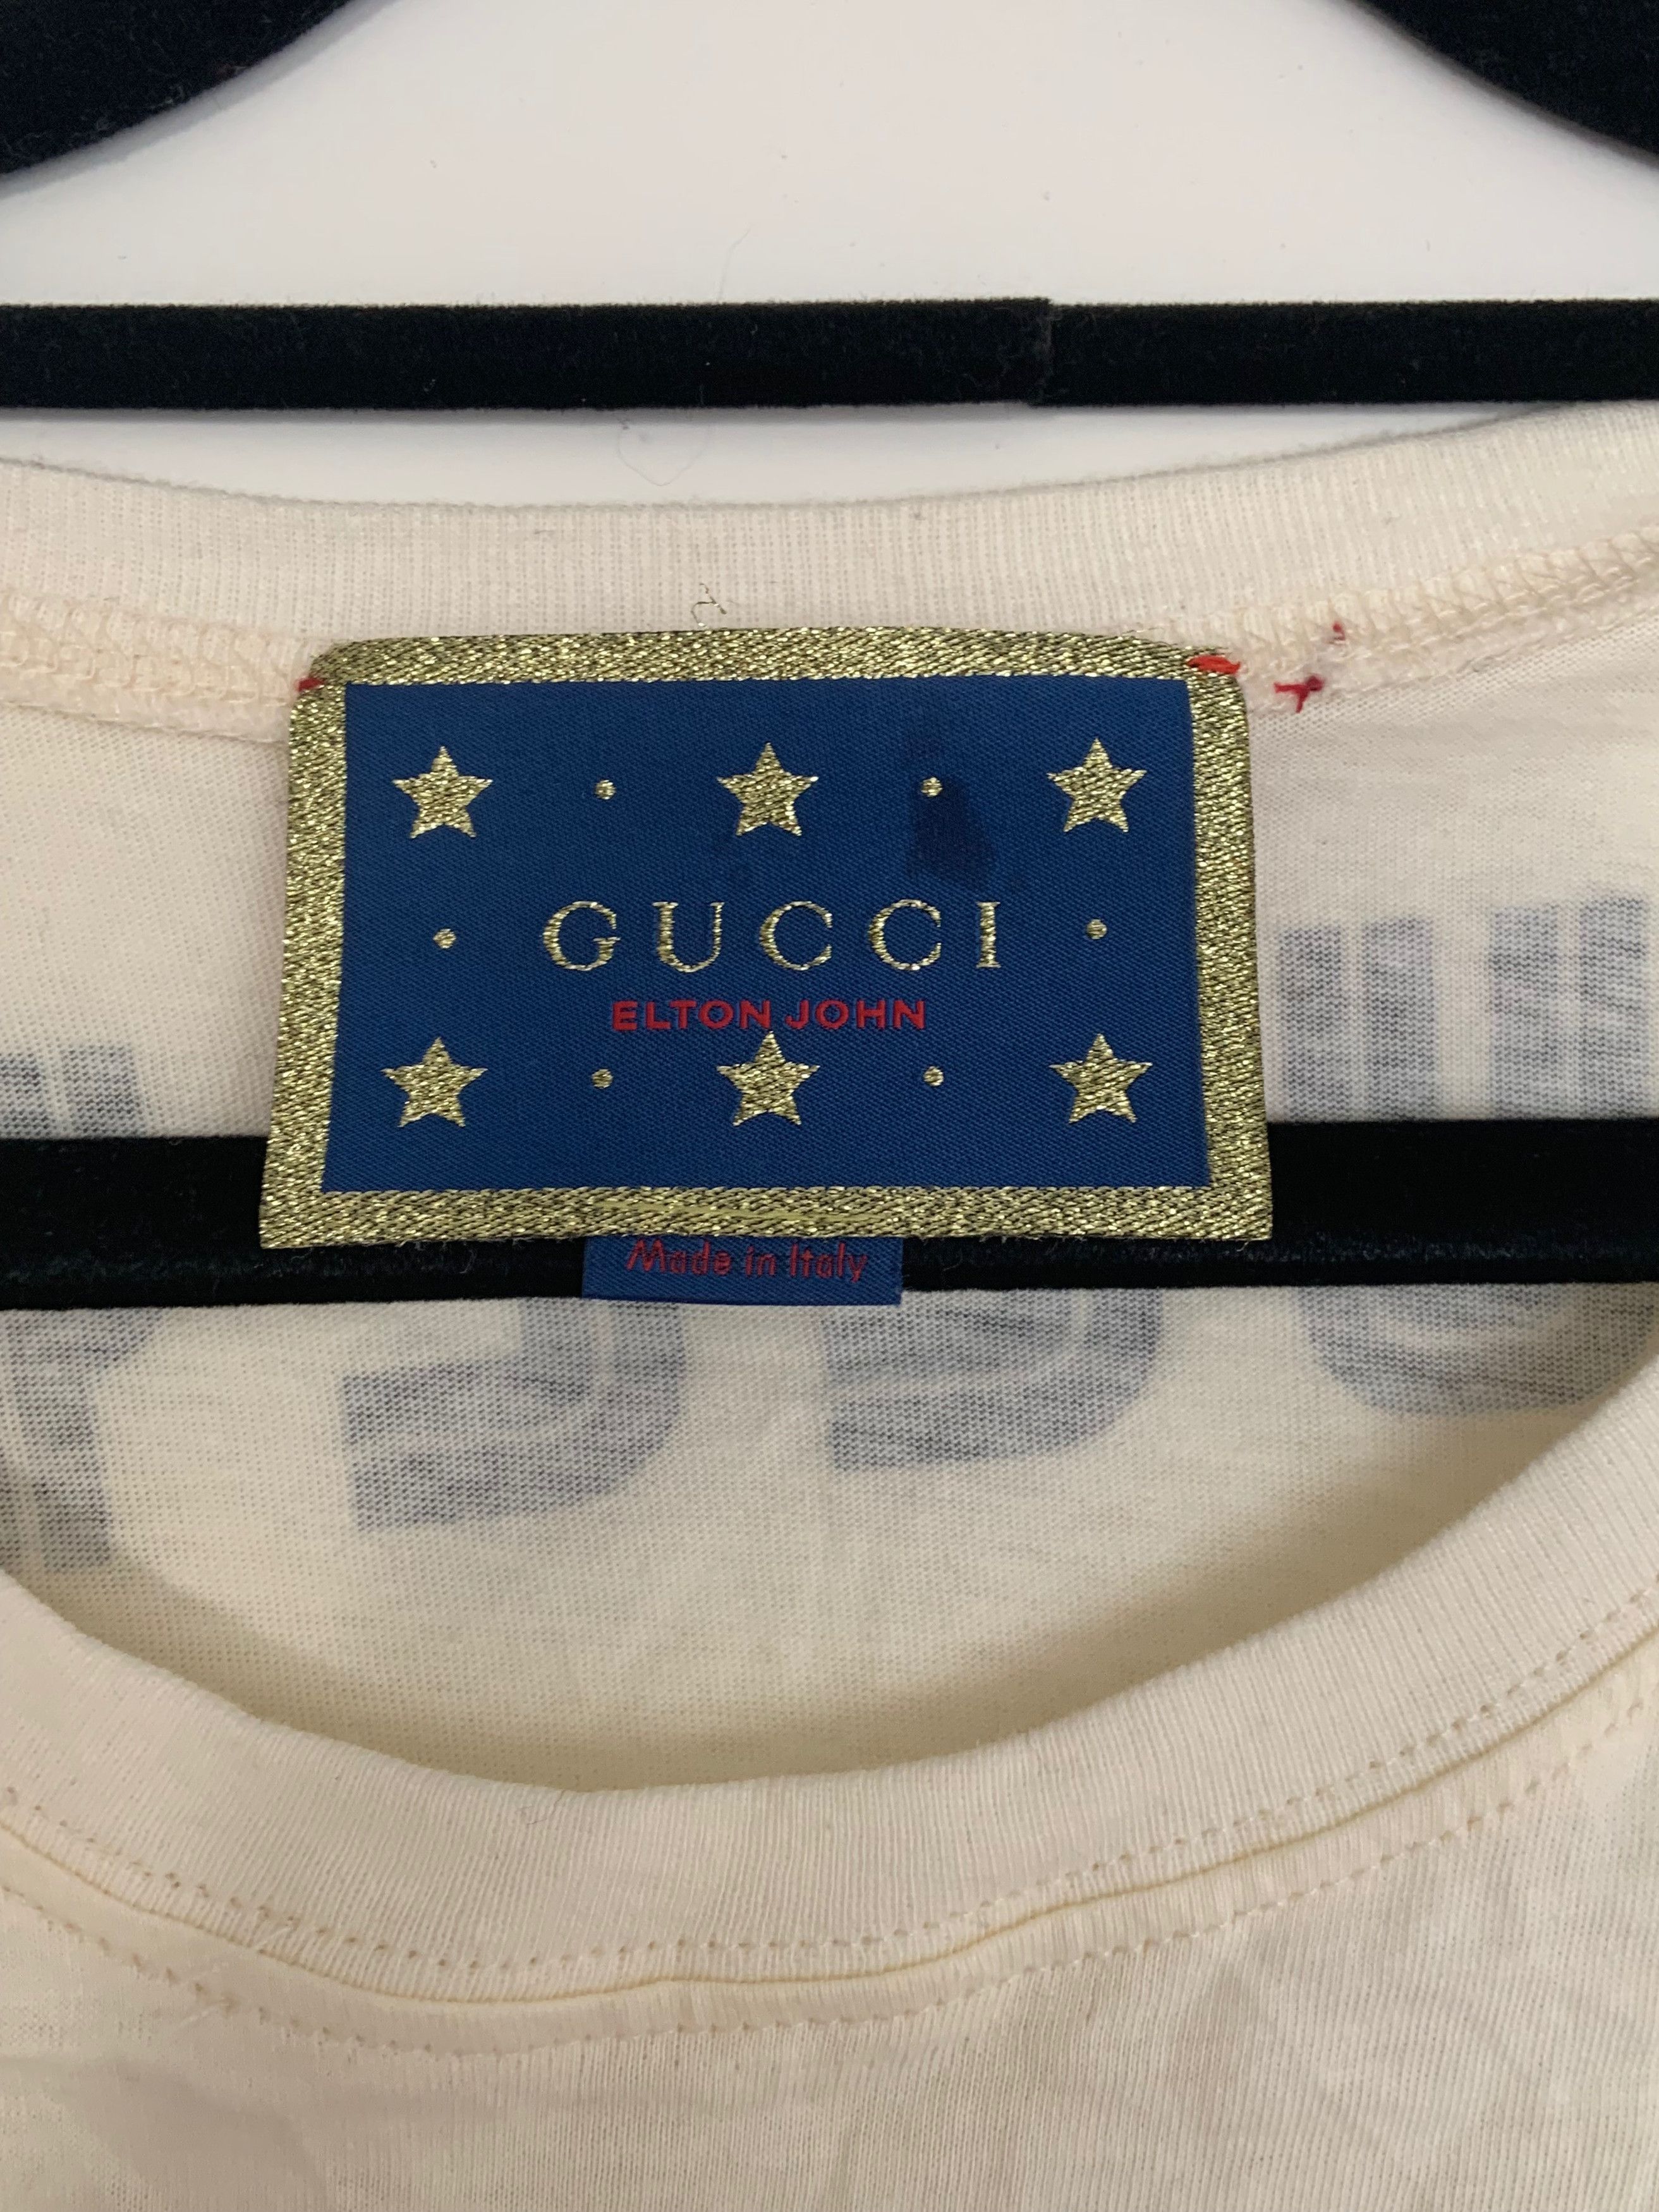 Gucci Gucci Elton John T-shirt Size US S / EU 44-46 / 1 - 3 Thumbnail